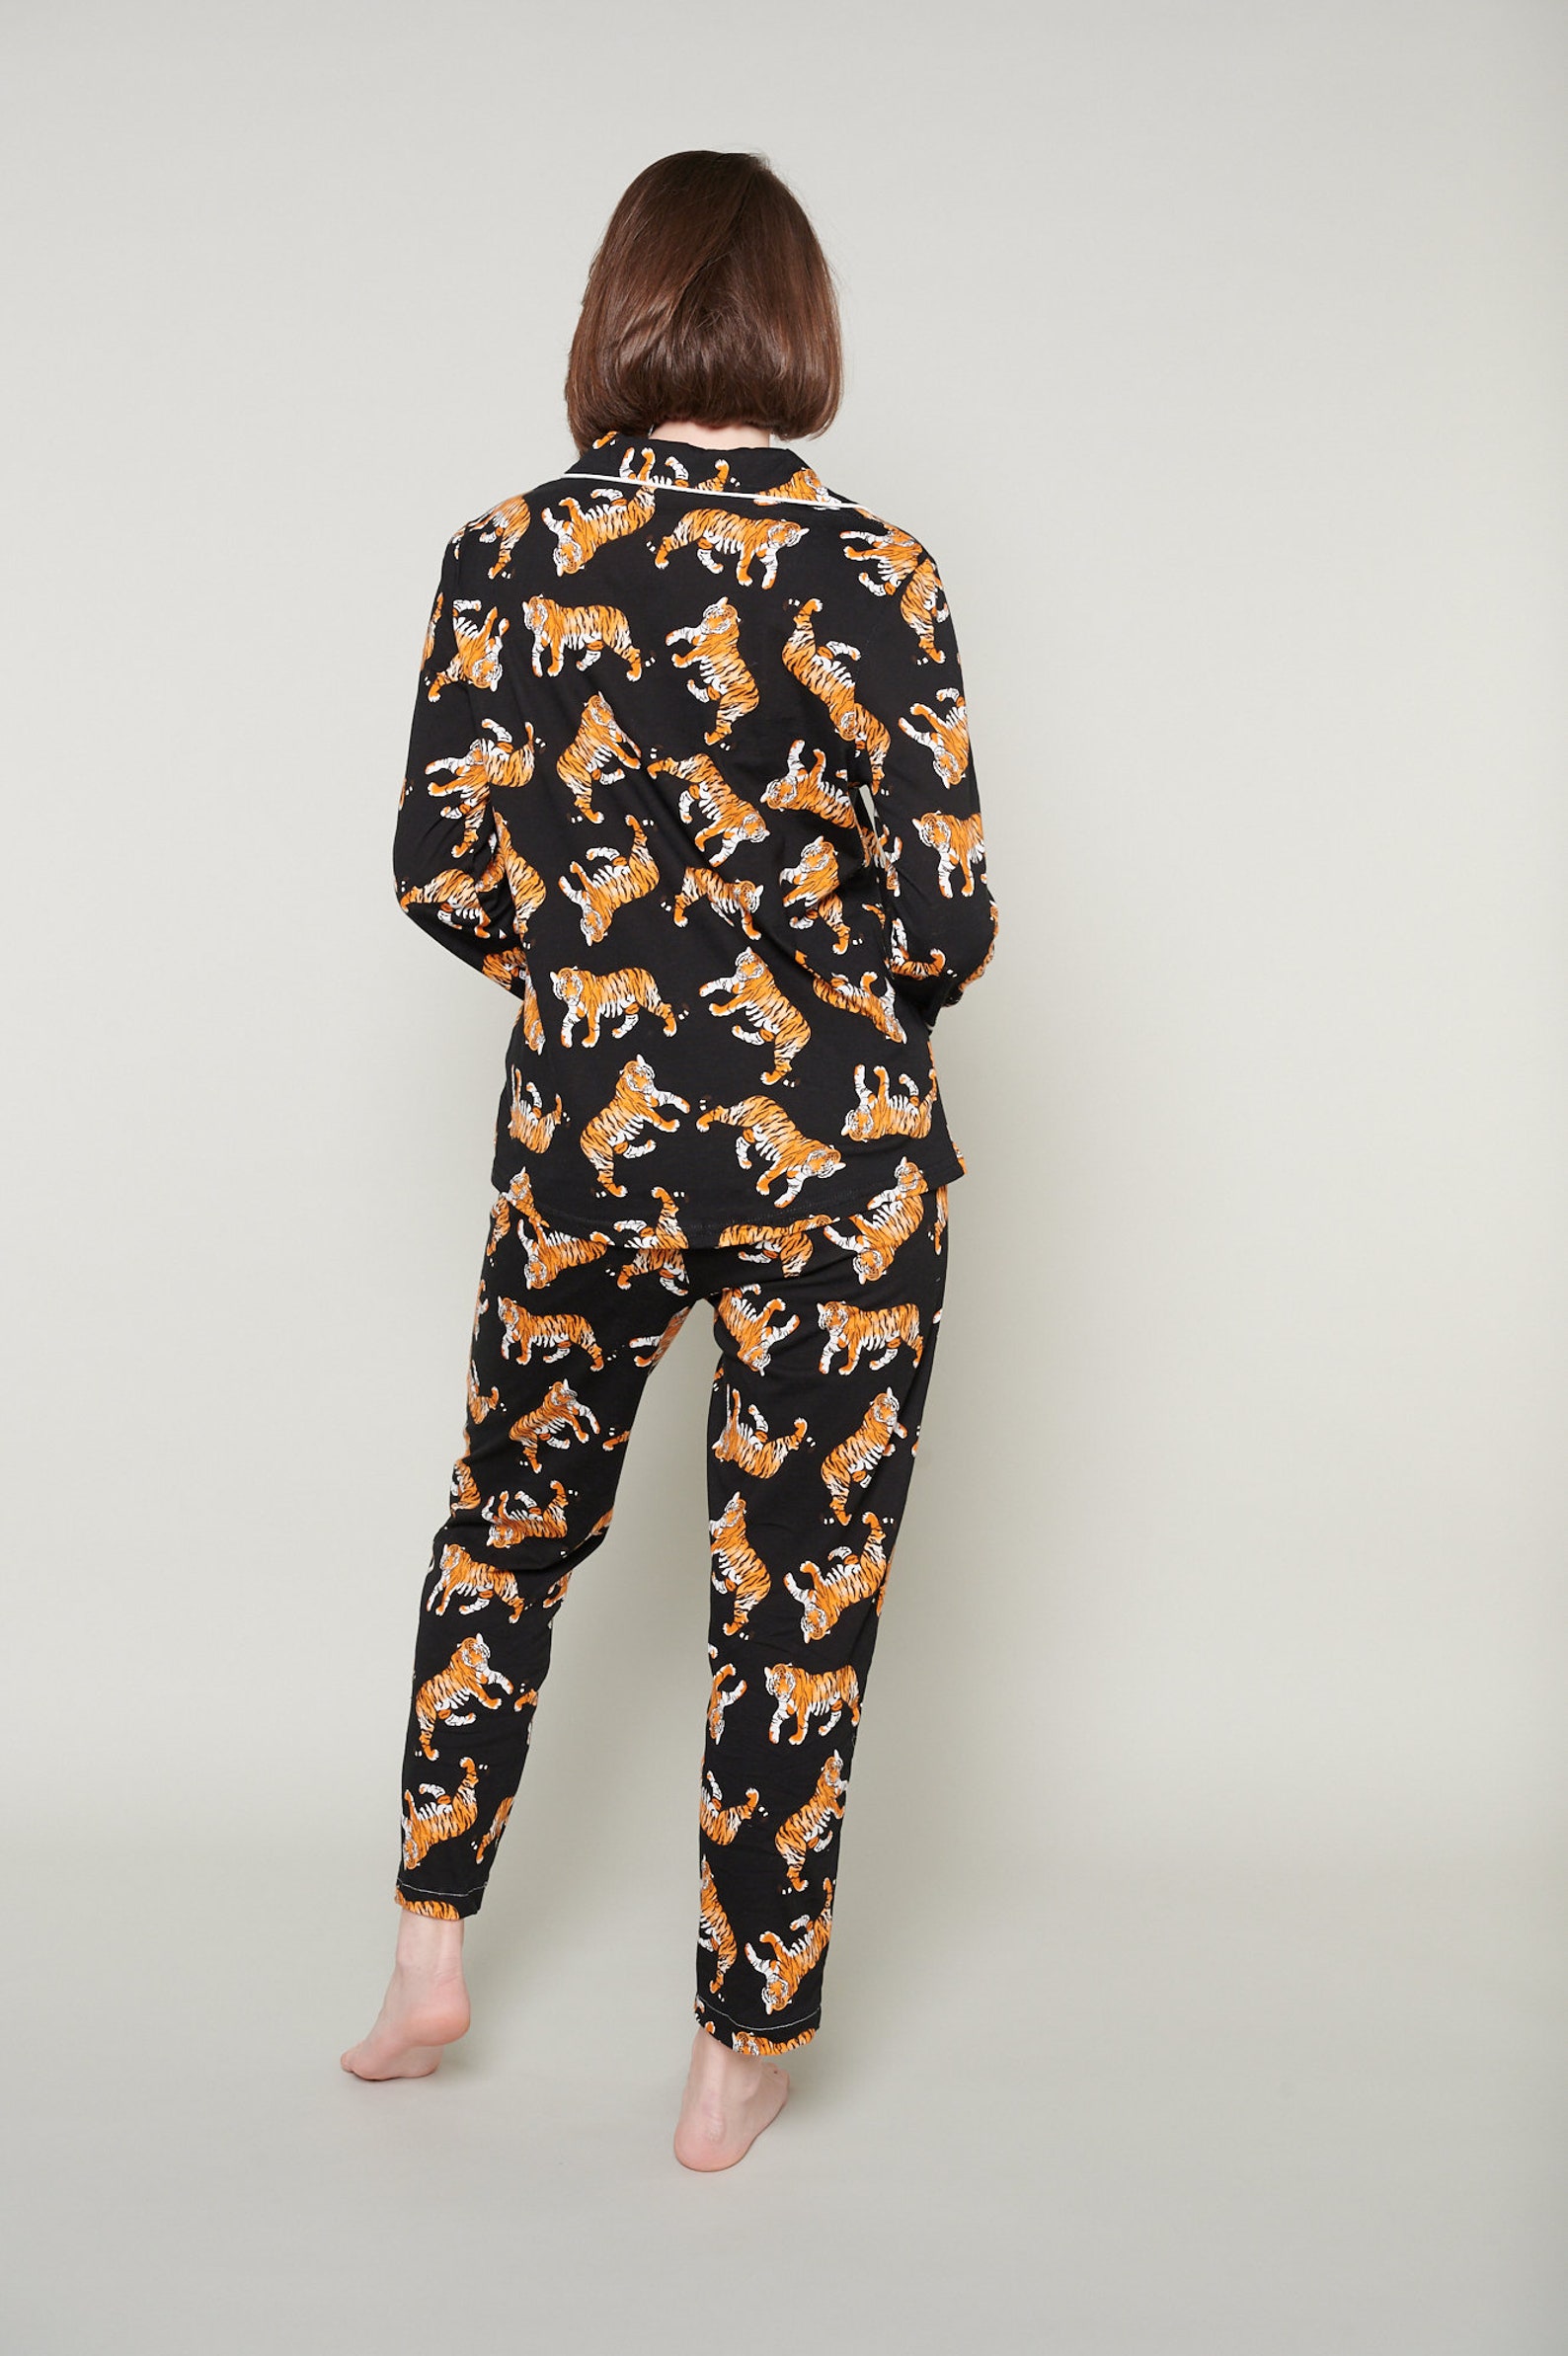 Liona Tiger Print Black Long Pajama Set Long Sleeve Sleep | Etsy